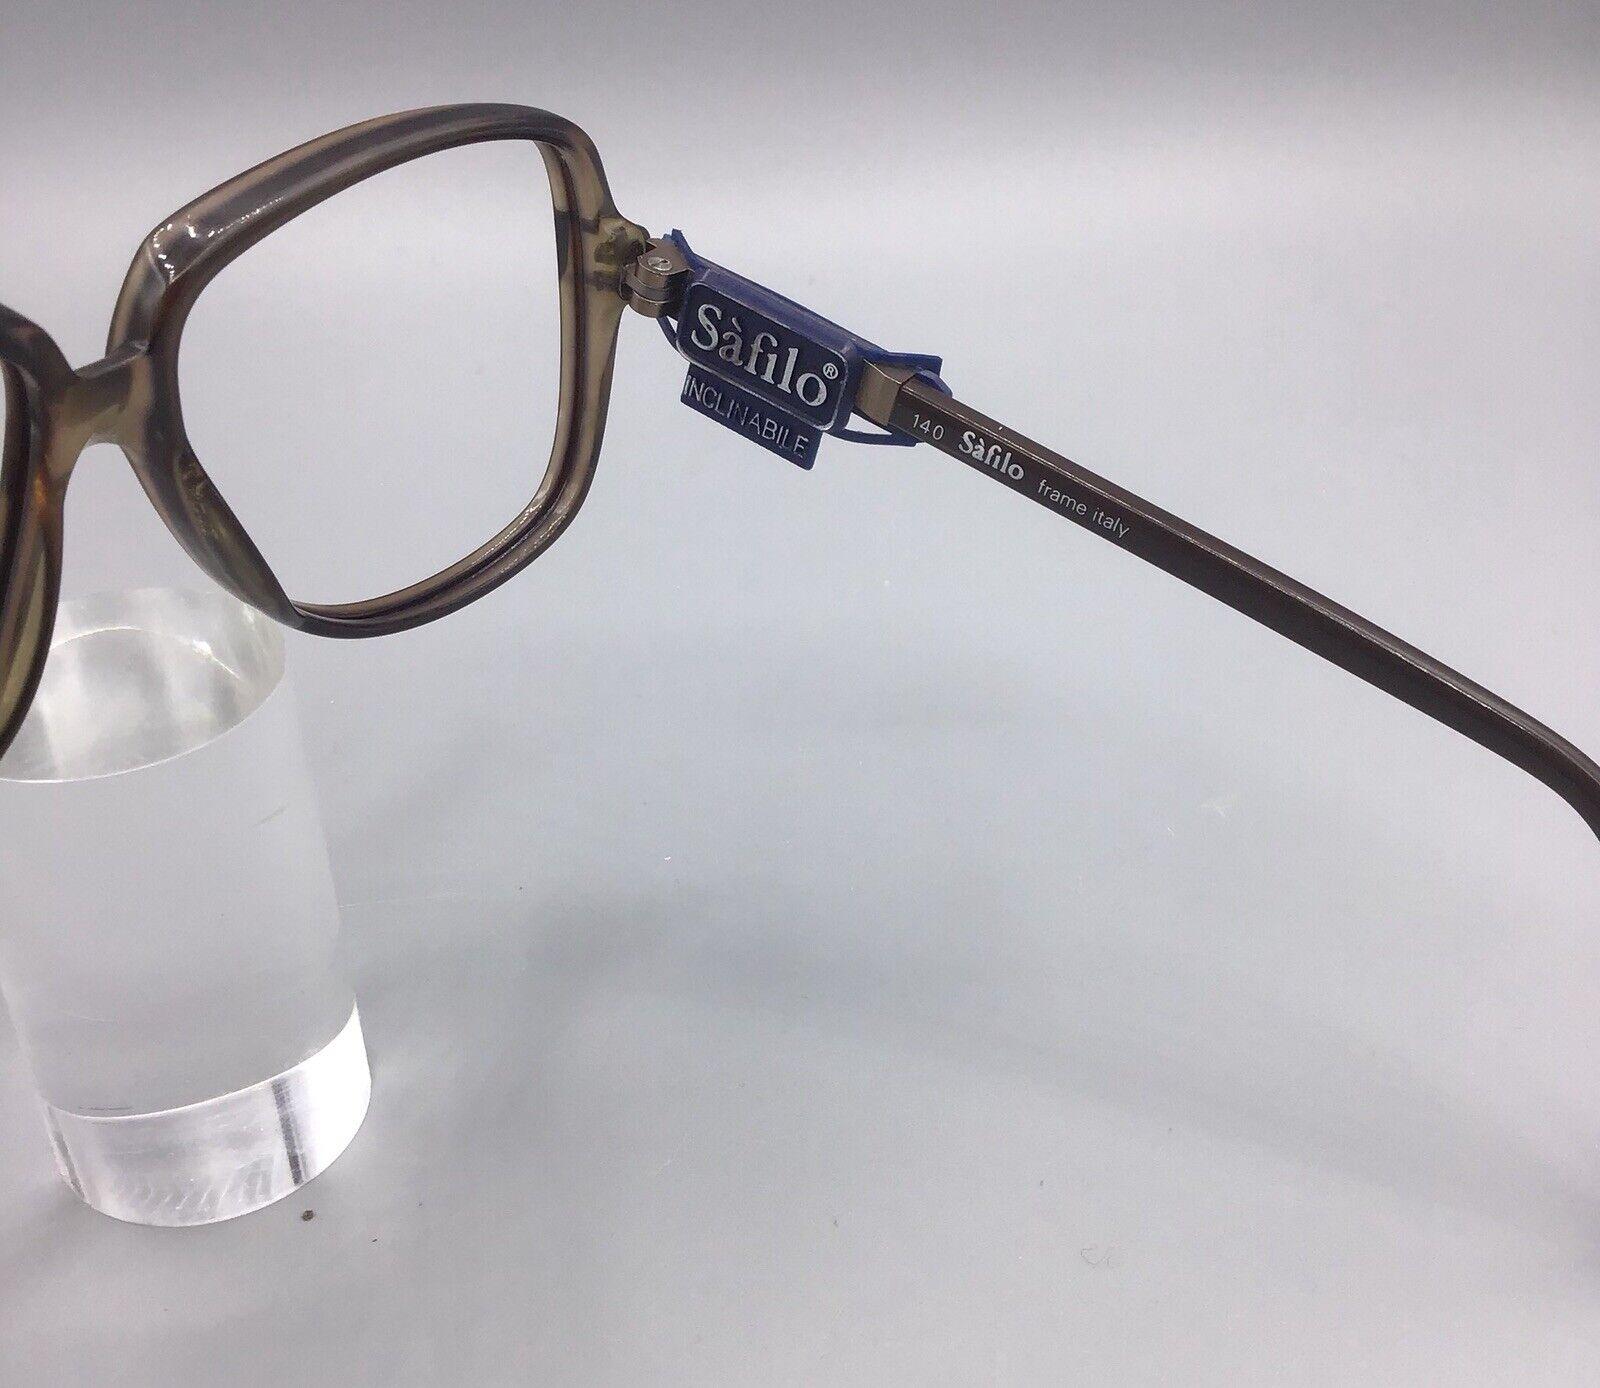 Safilo inclinabile frame italy contempora 609 617 occhiale vintage eyewear